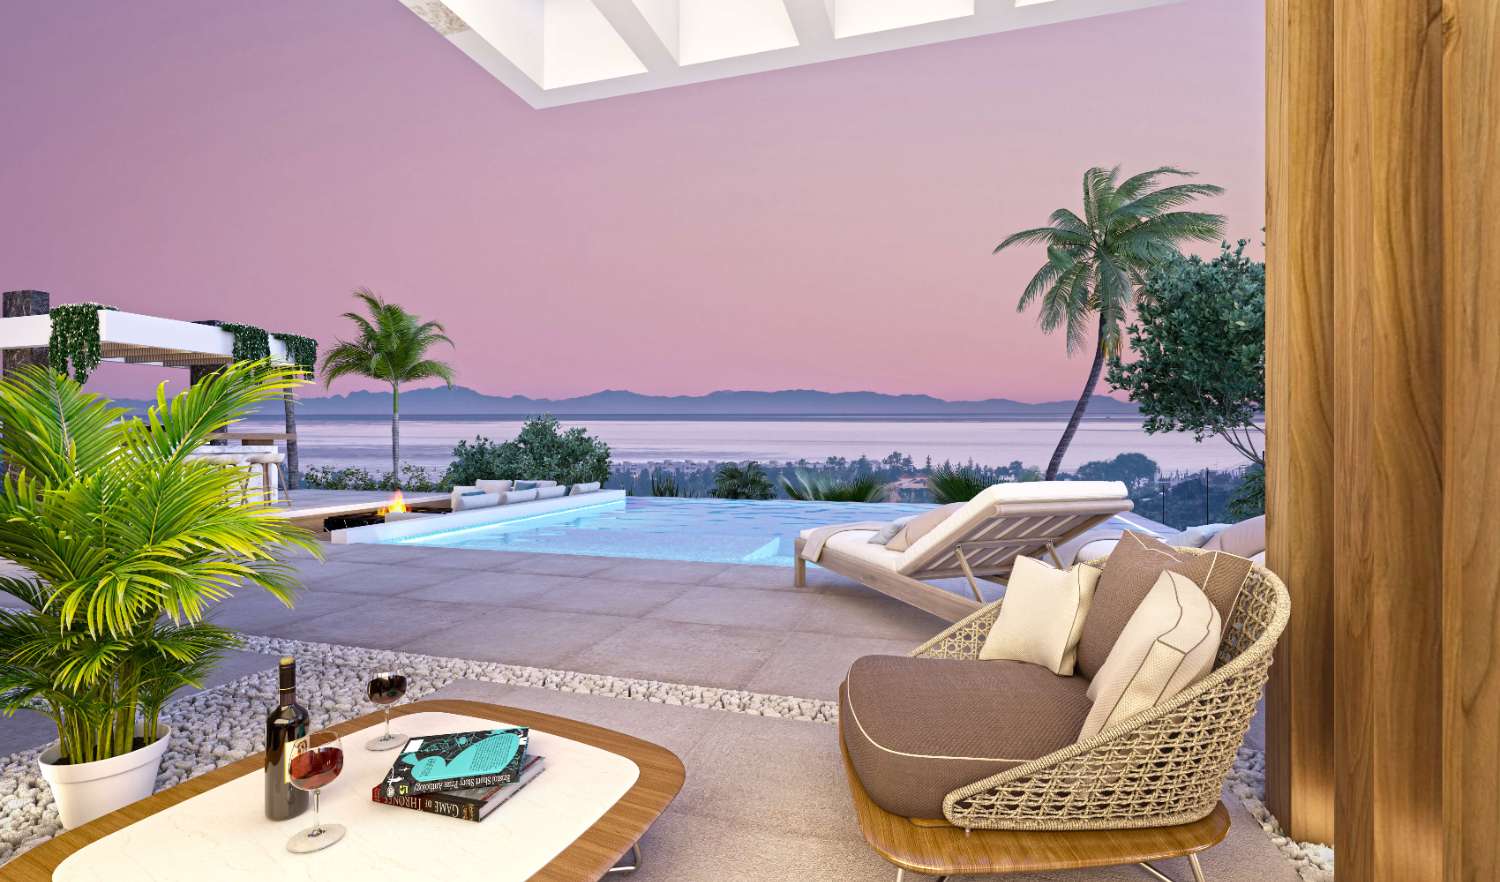 Luxury villa development  located between Marbella and Estepona